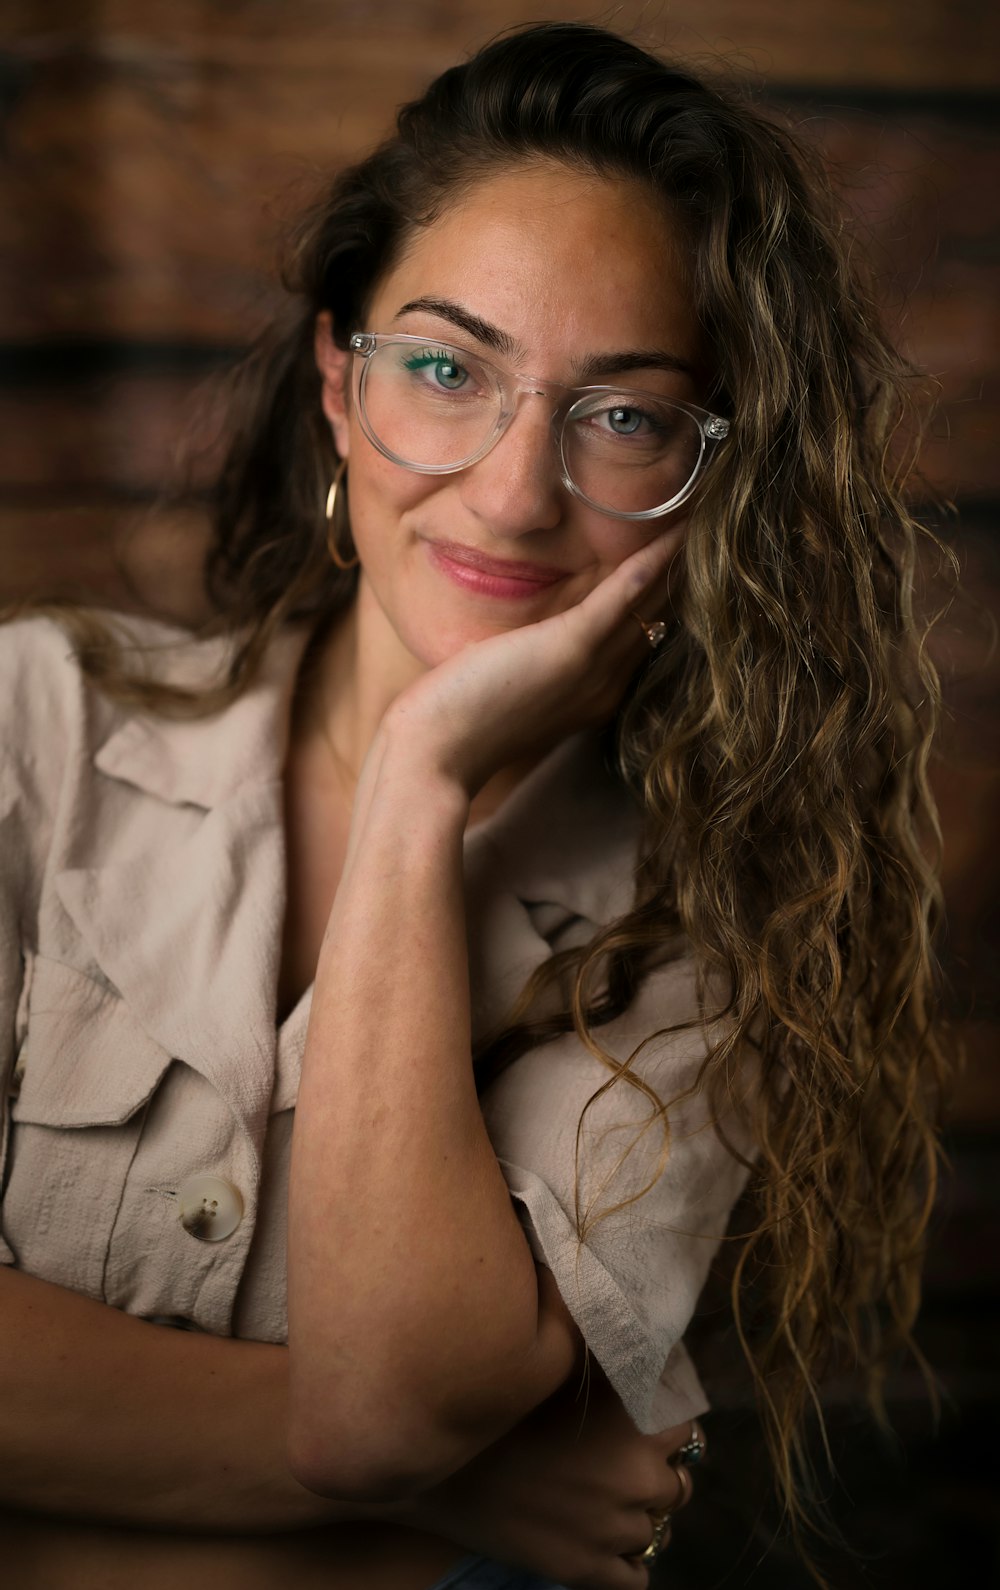 woman in white button up shirt wearing eyeglasses